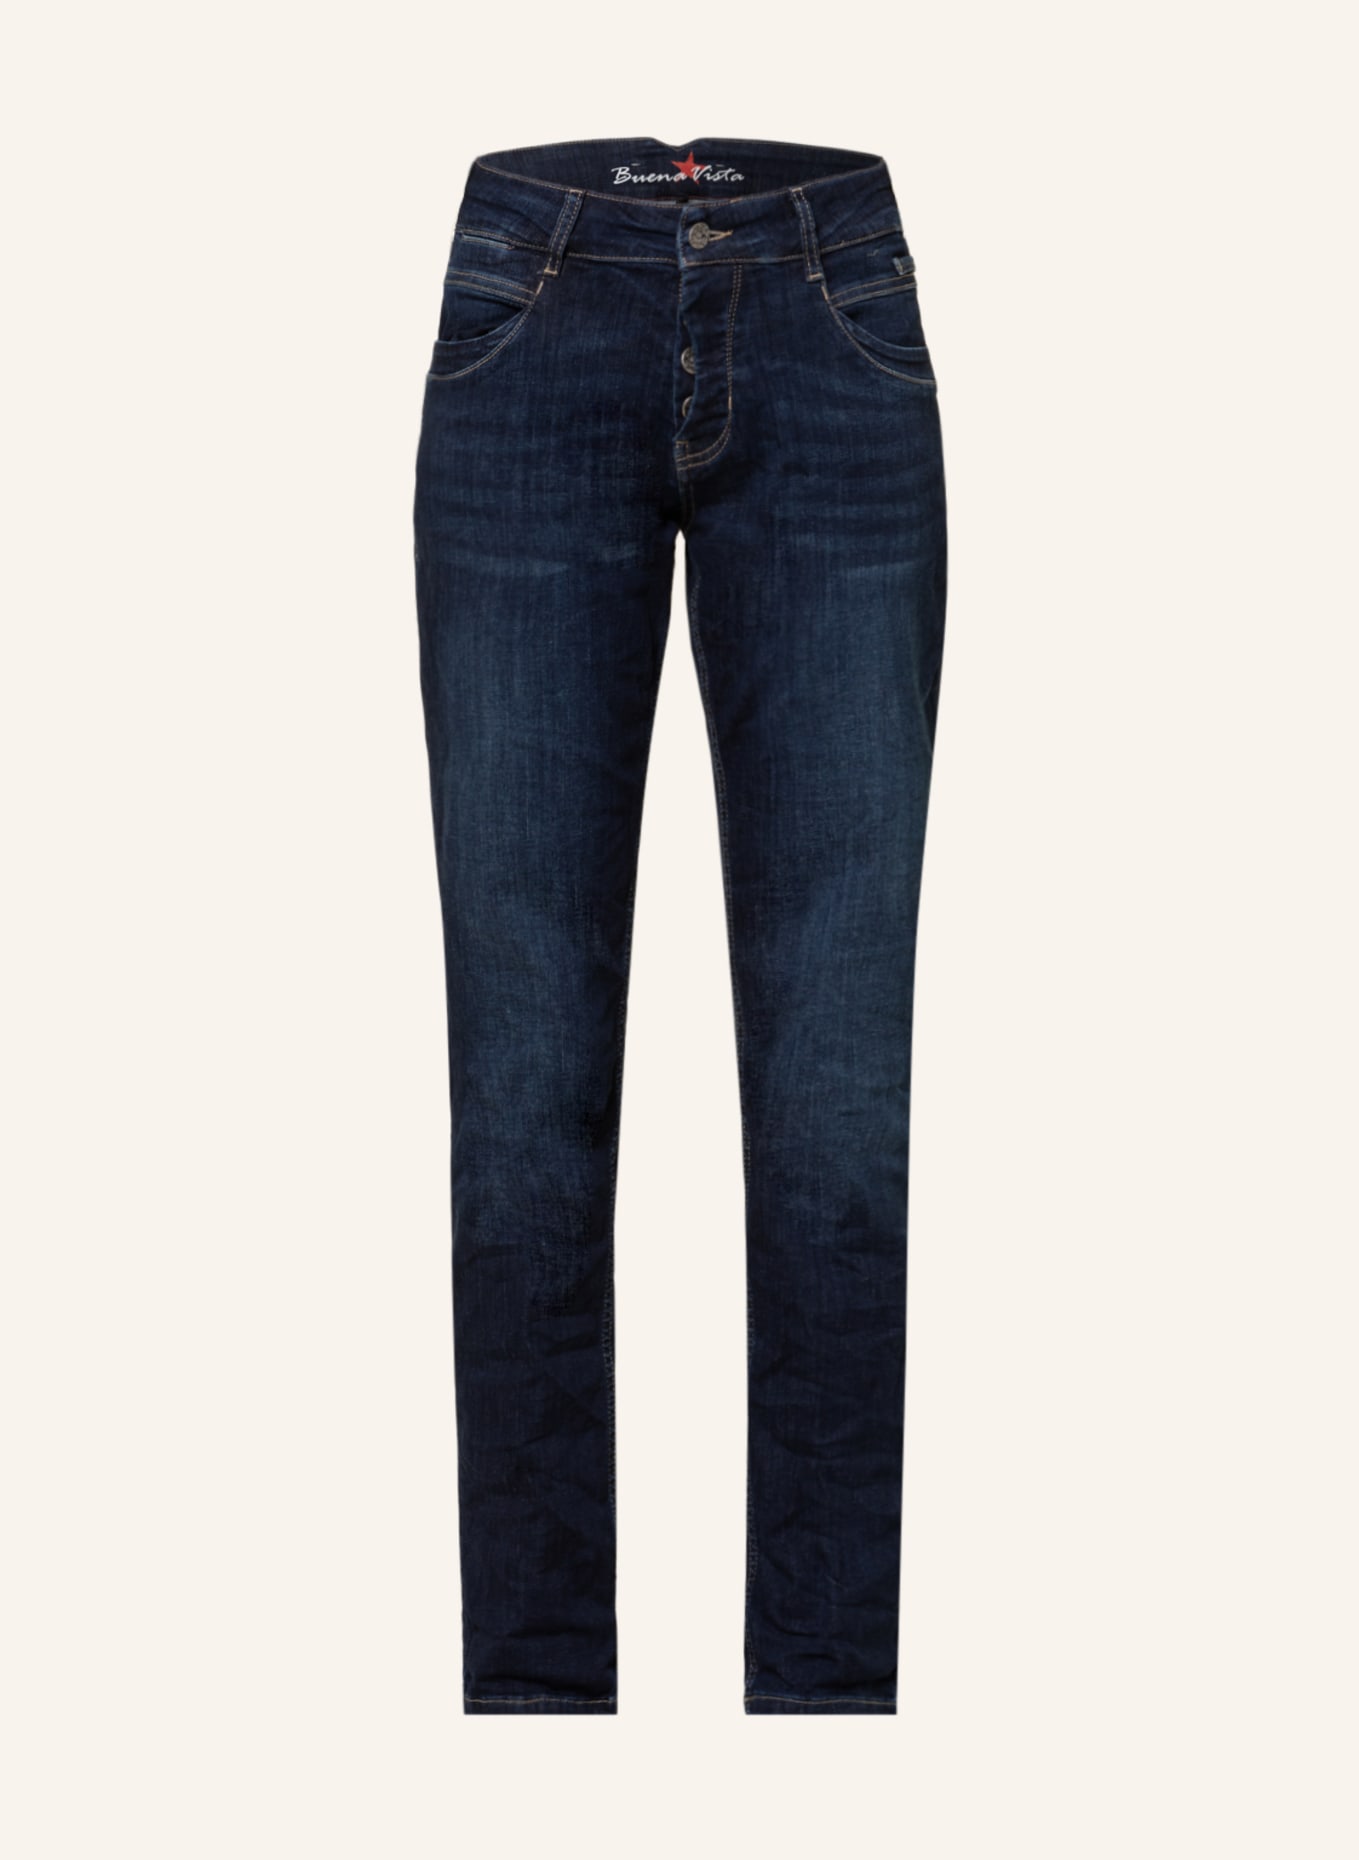 Buena Vista 7/8-Jeans BALI, Farbe: 5095 dark blue (Bild 1)